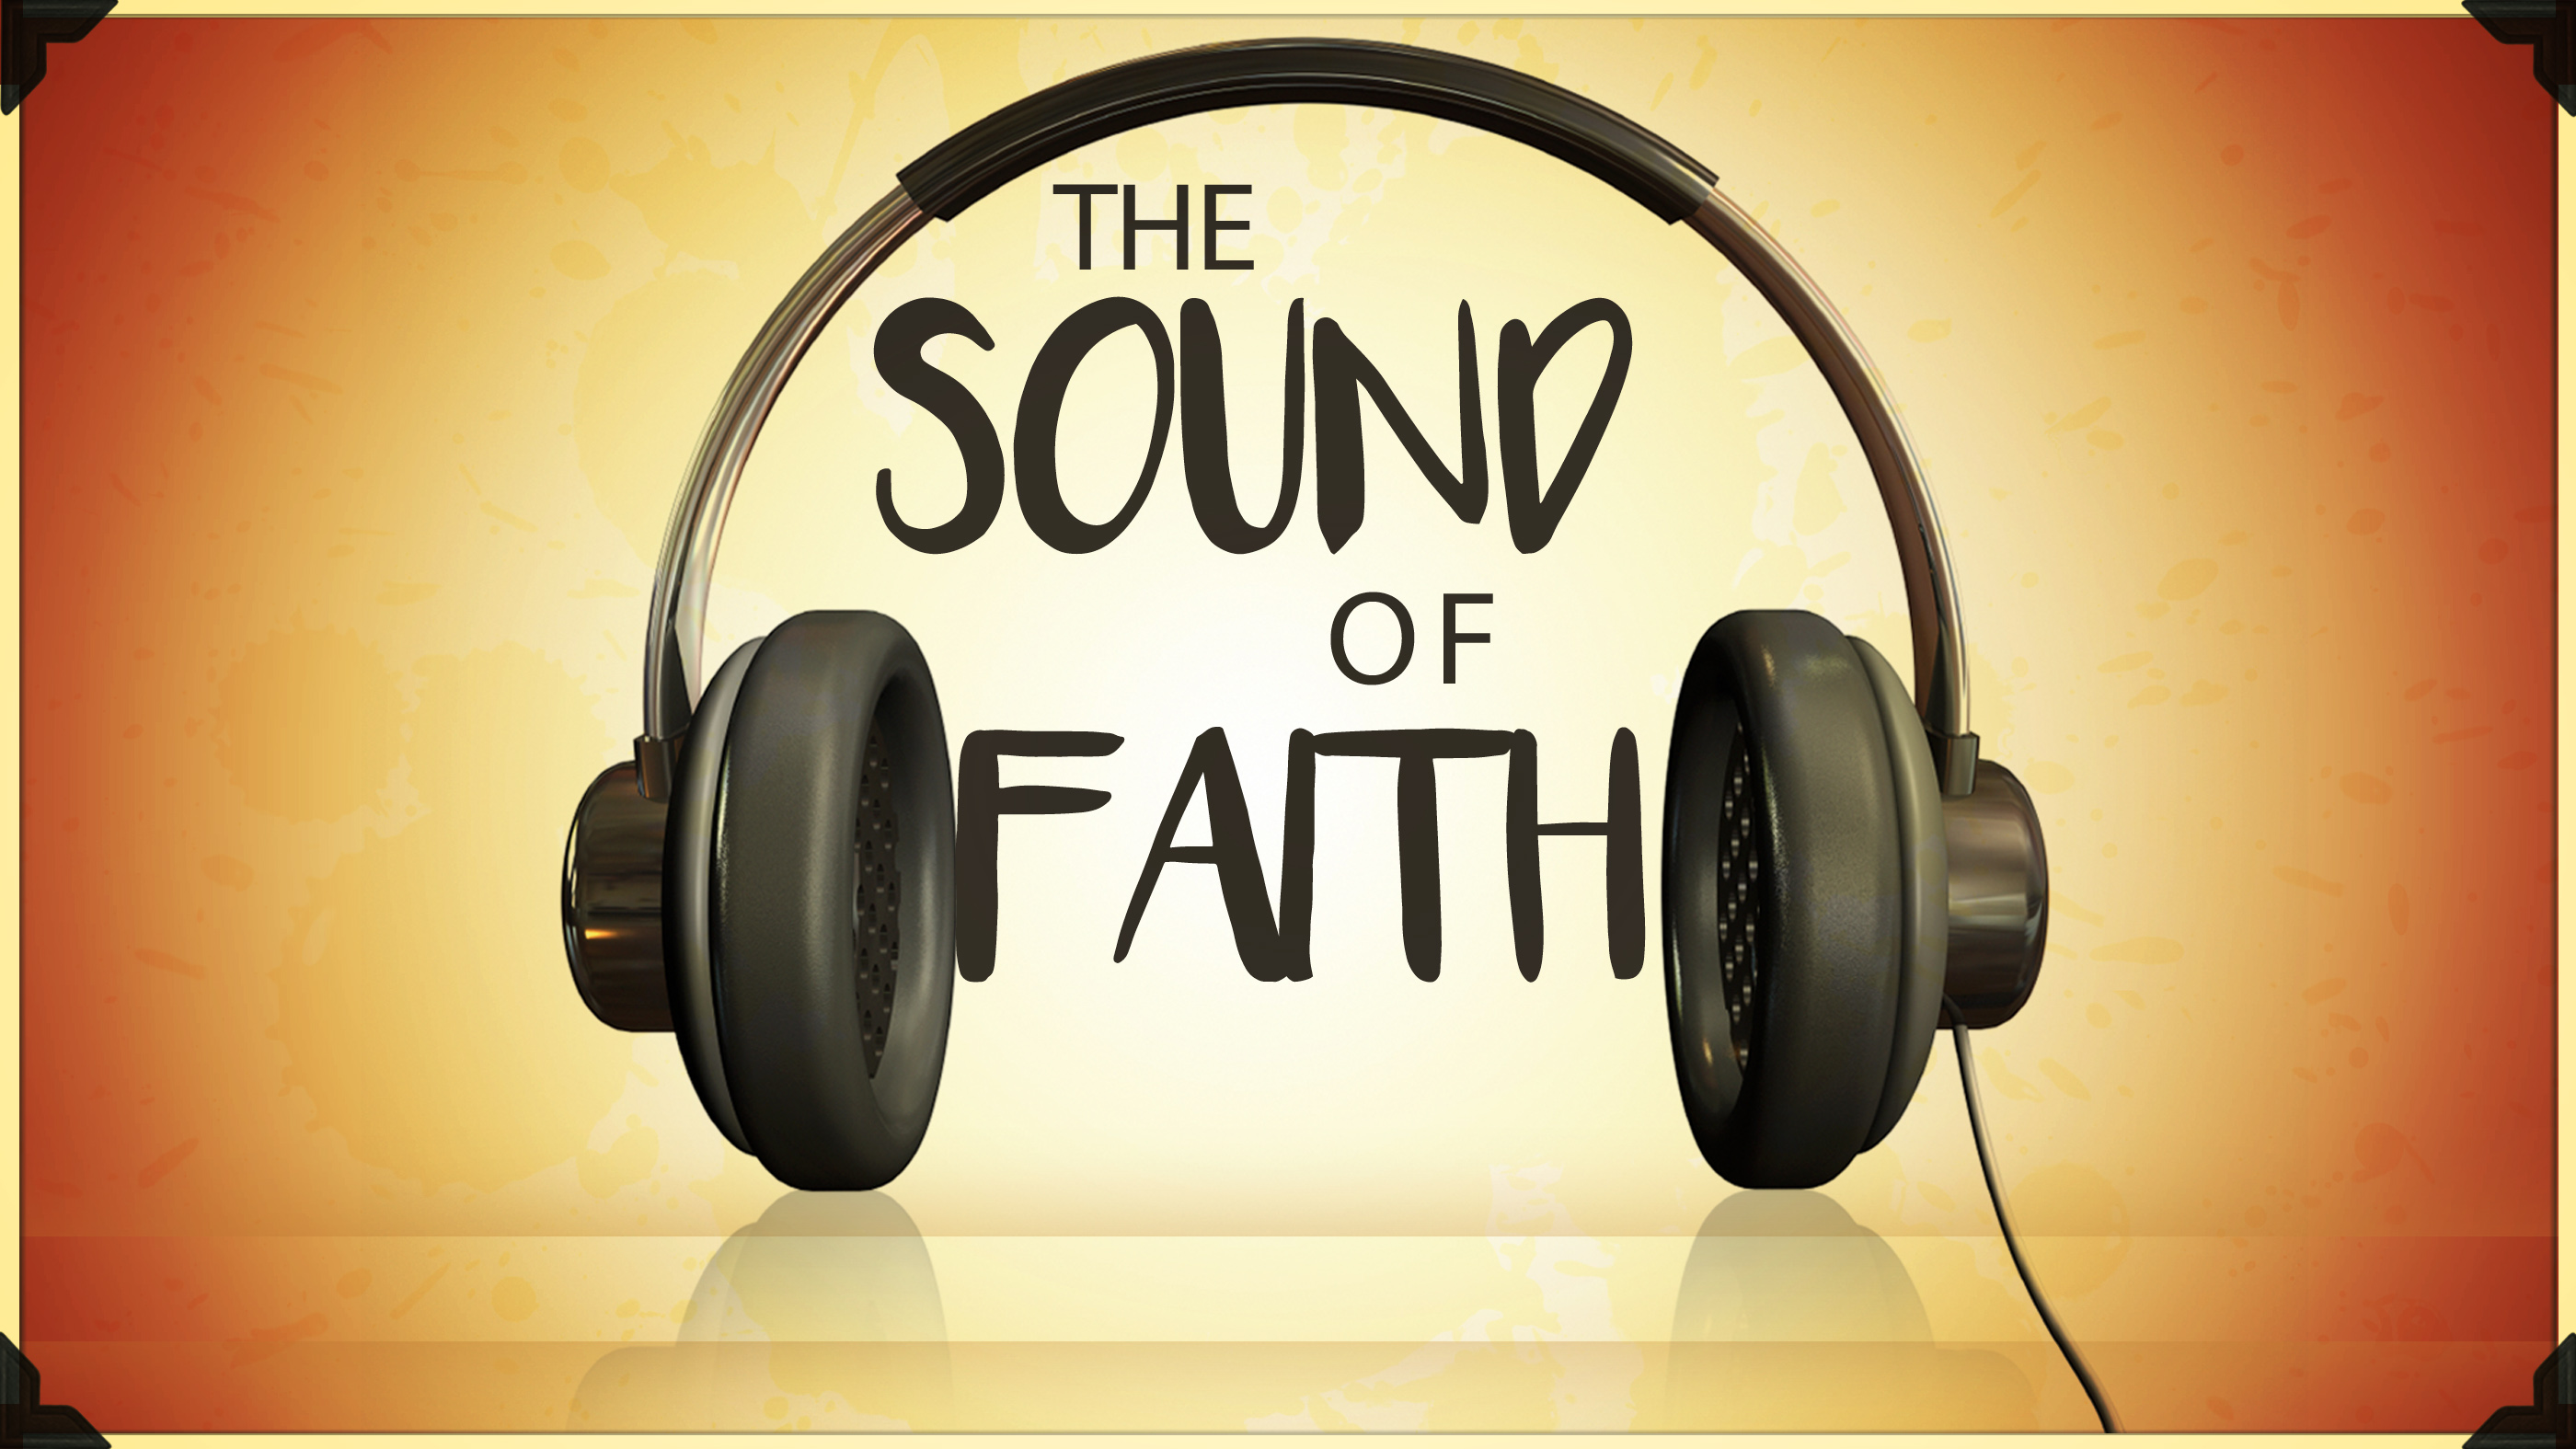 The Power of Prayer part 3 (The Sound of Faith)